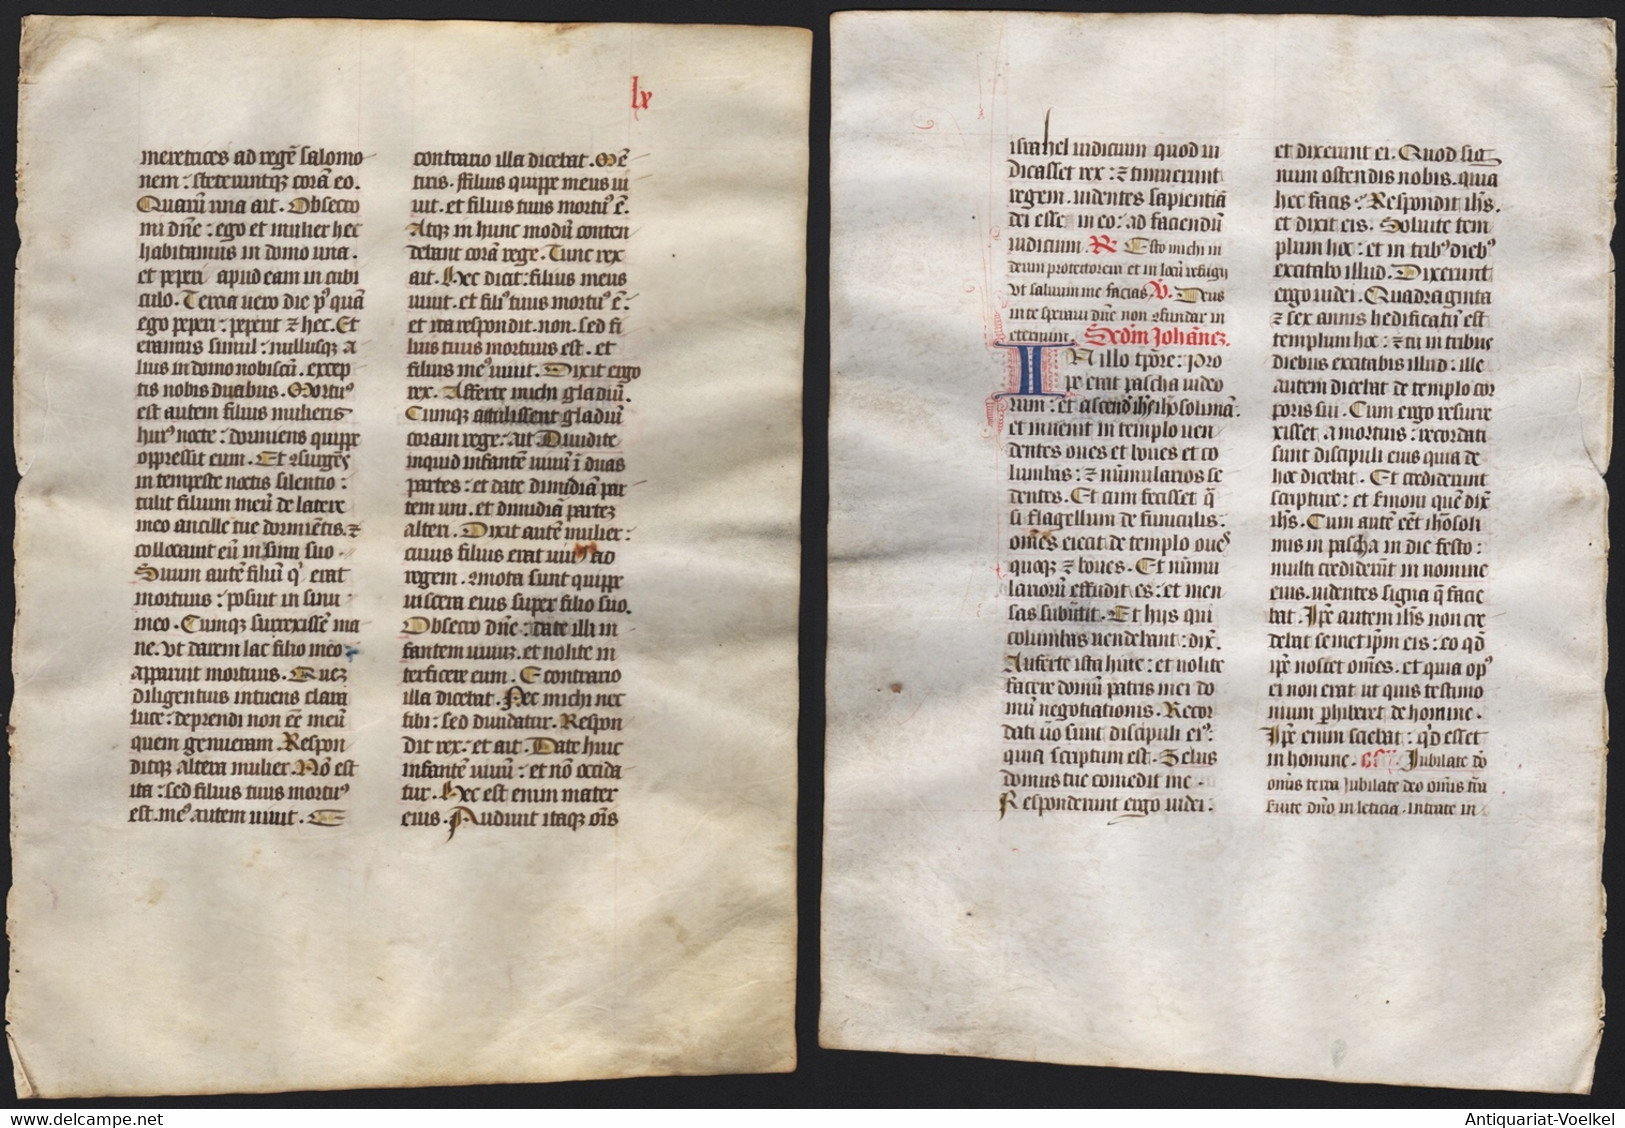 Missal Missale Manuscript Manuscrit Handschrift - (Blatt / Leaf LX) - Theater & Scripts